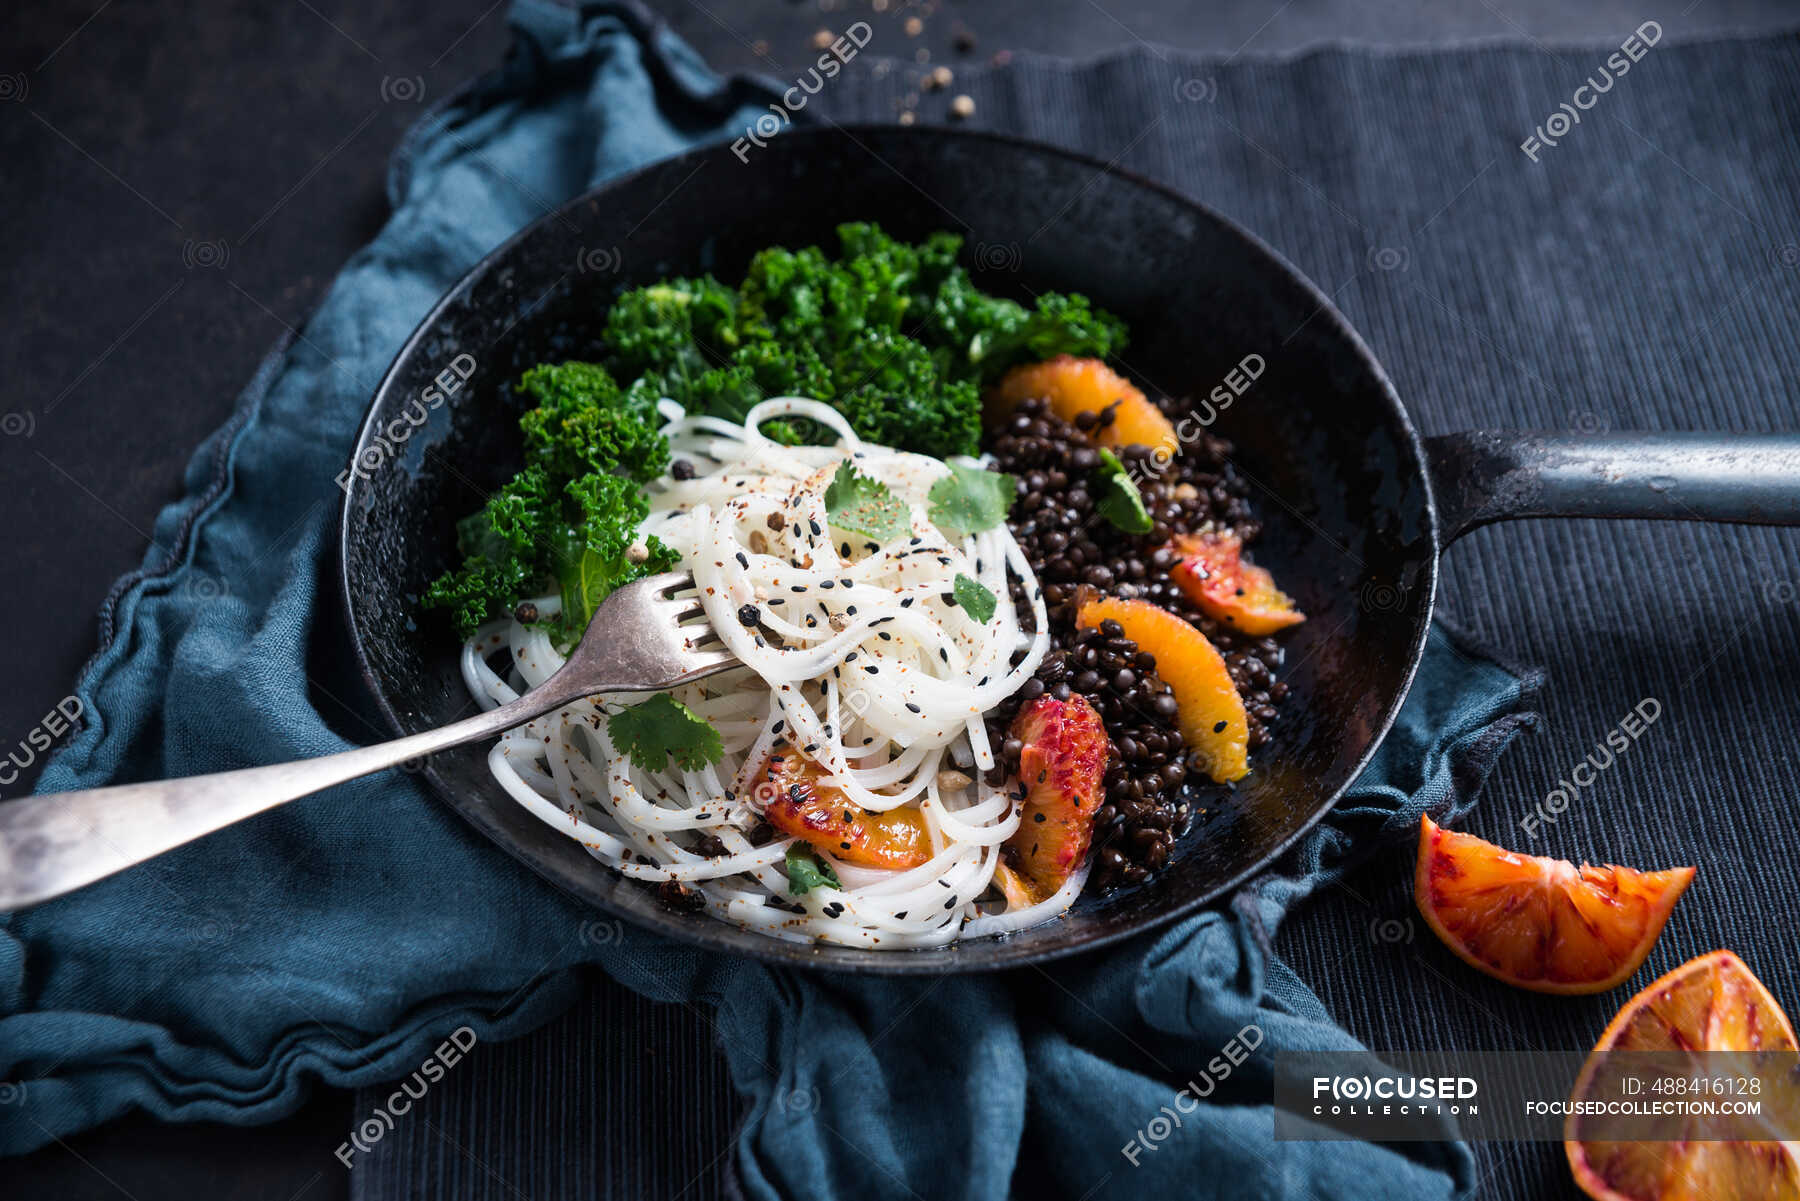 Vegan tapioca pasta with beluga lentils, kale, blood oranges and coriander  — noodle dish, fruit - Stock Photo | #488416128